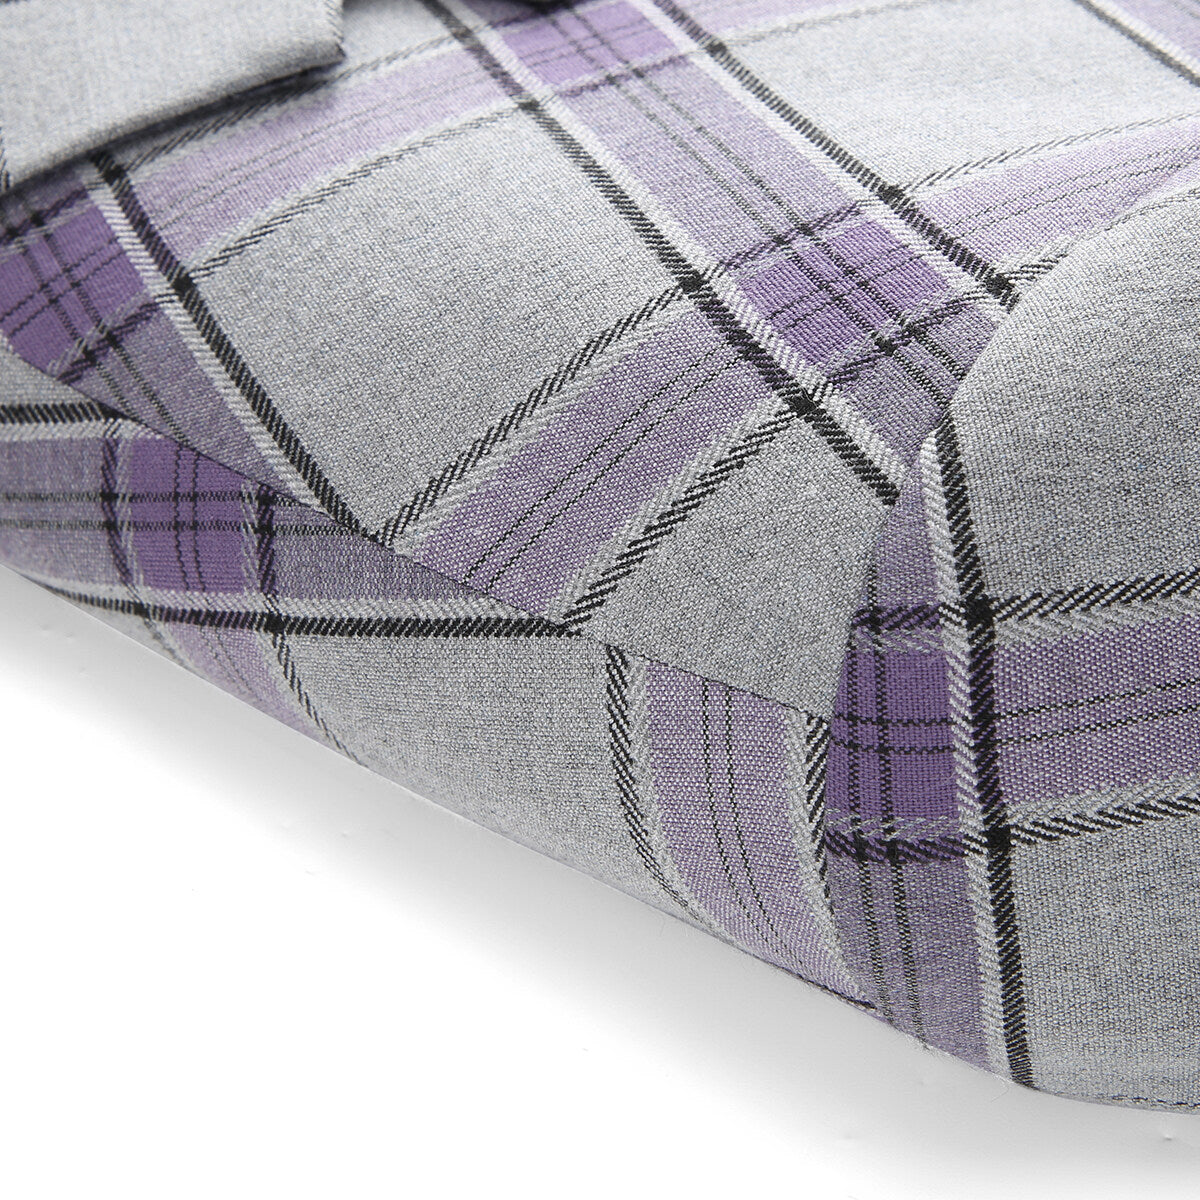 Men's Plaid Notch Lapel Collar One Button Blazer Purple